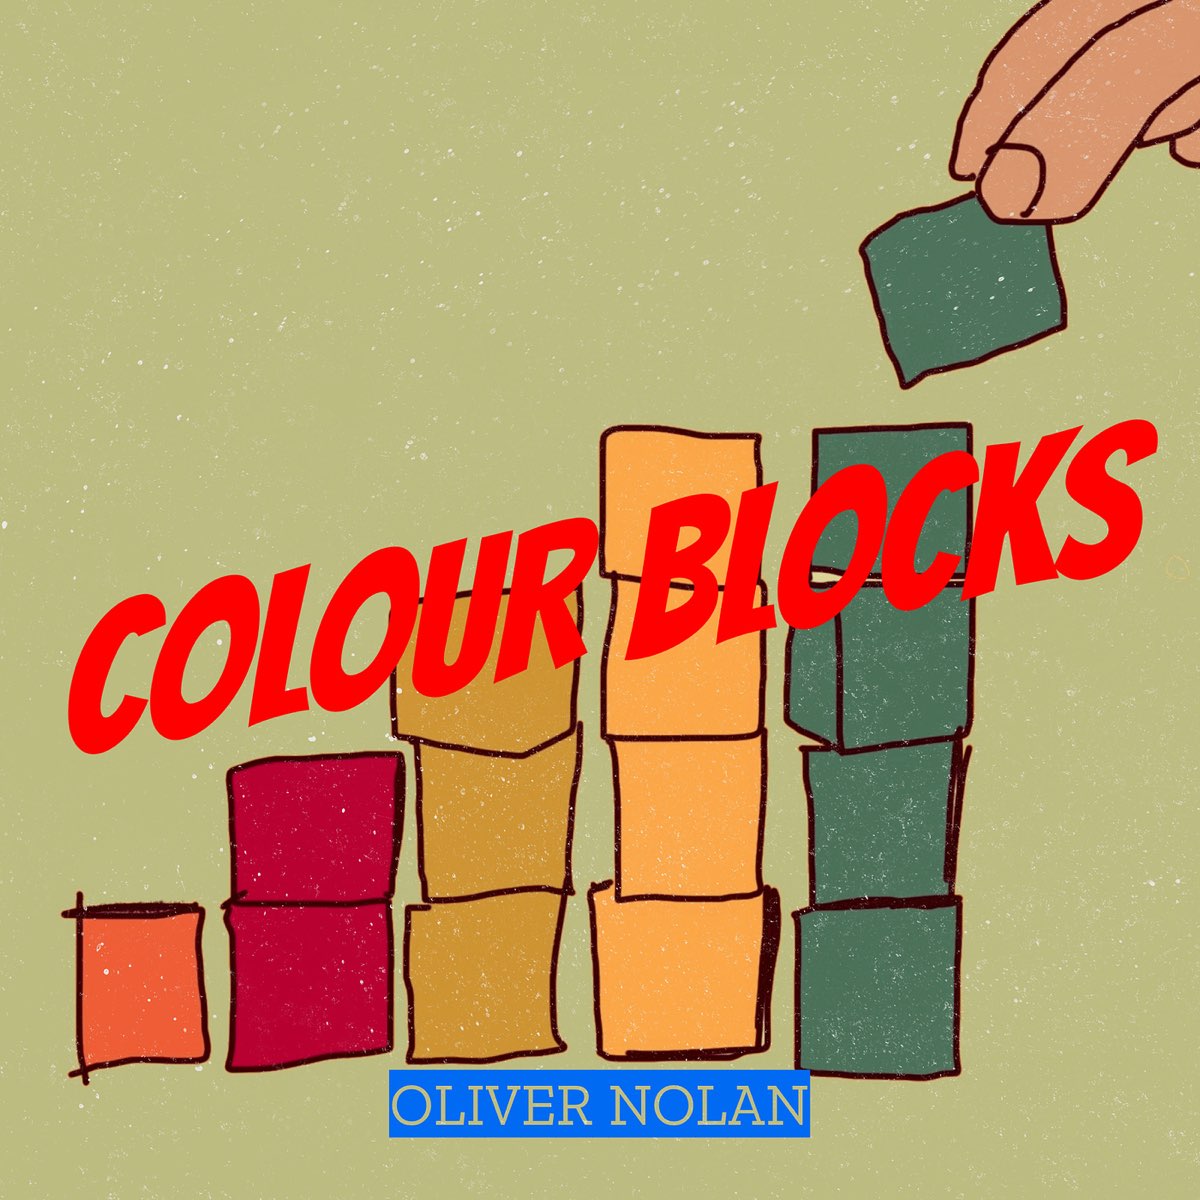 Official Colourblocks Band but 35 Colourblocks 